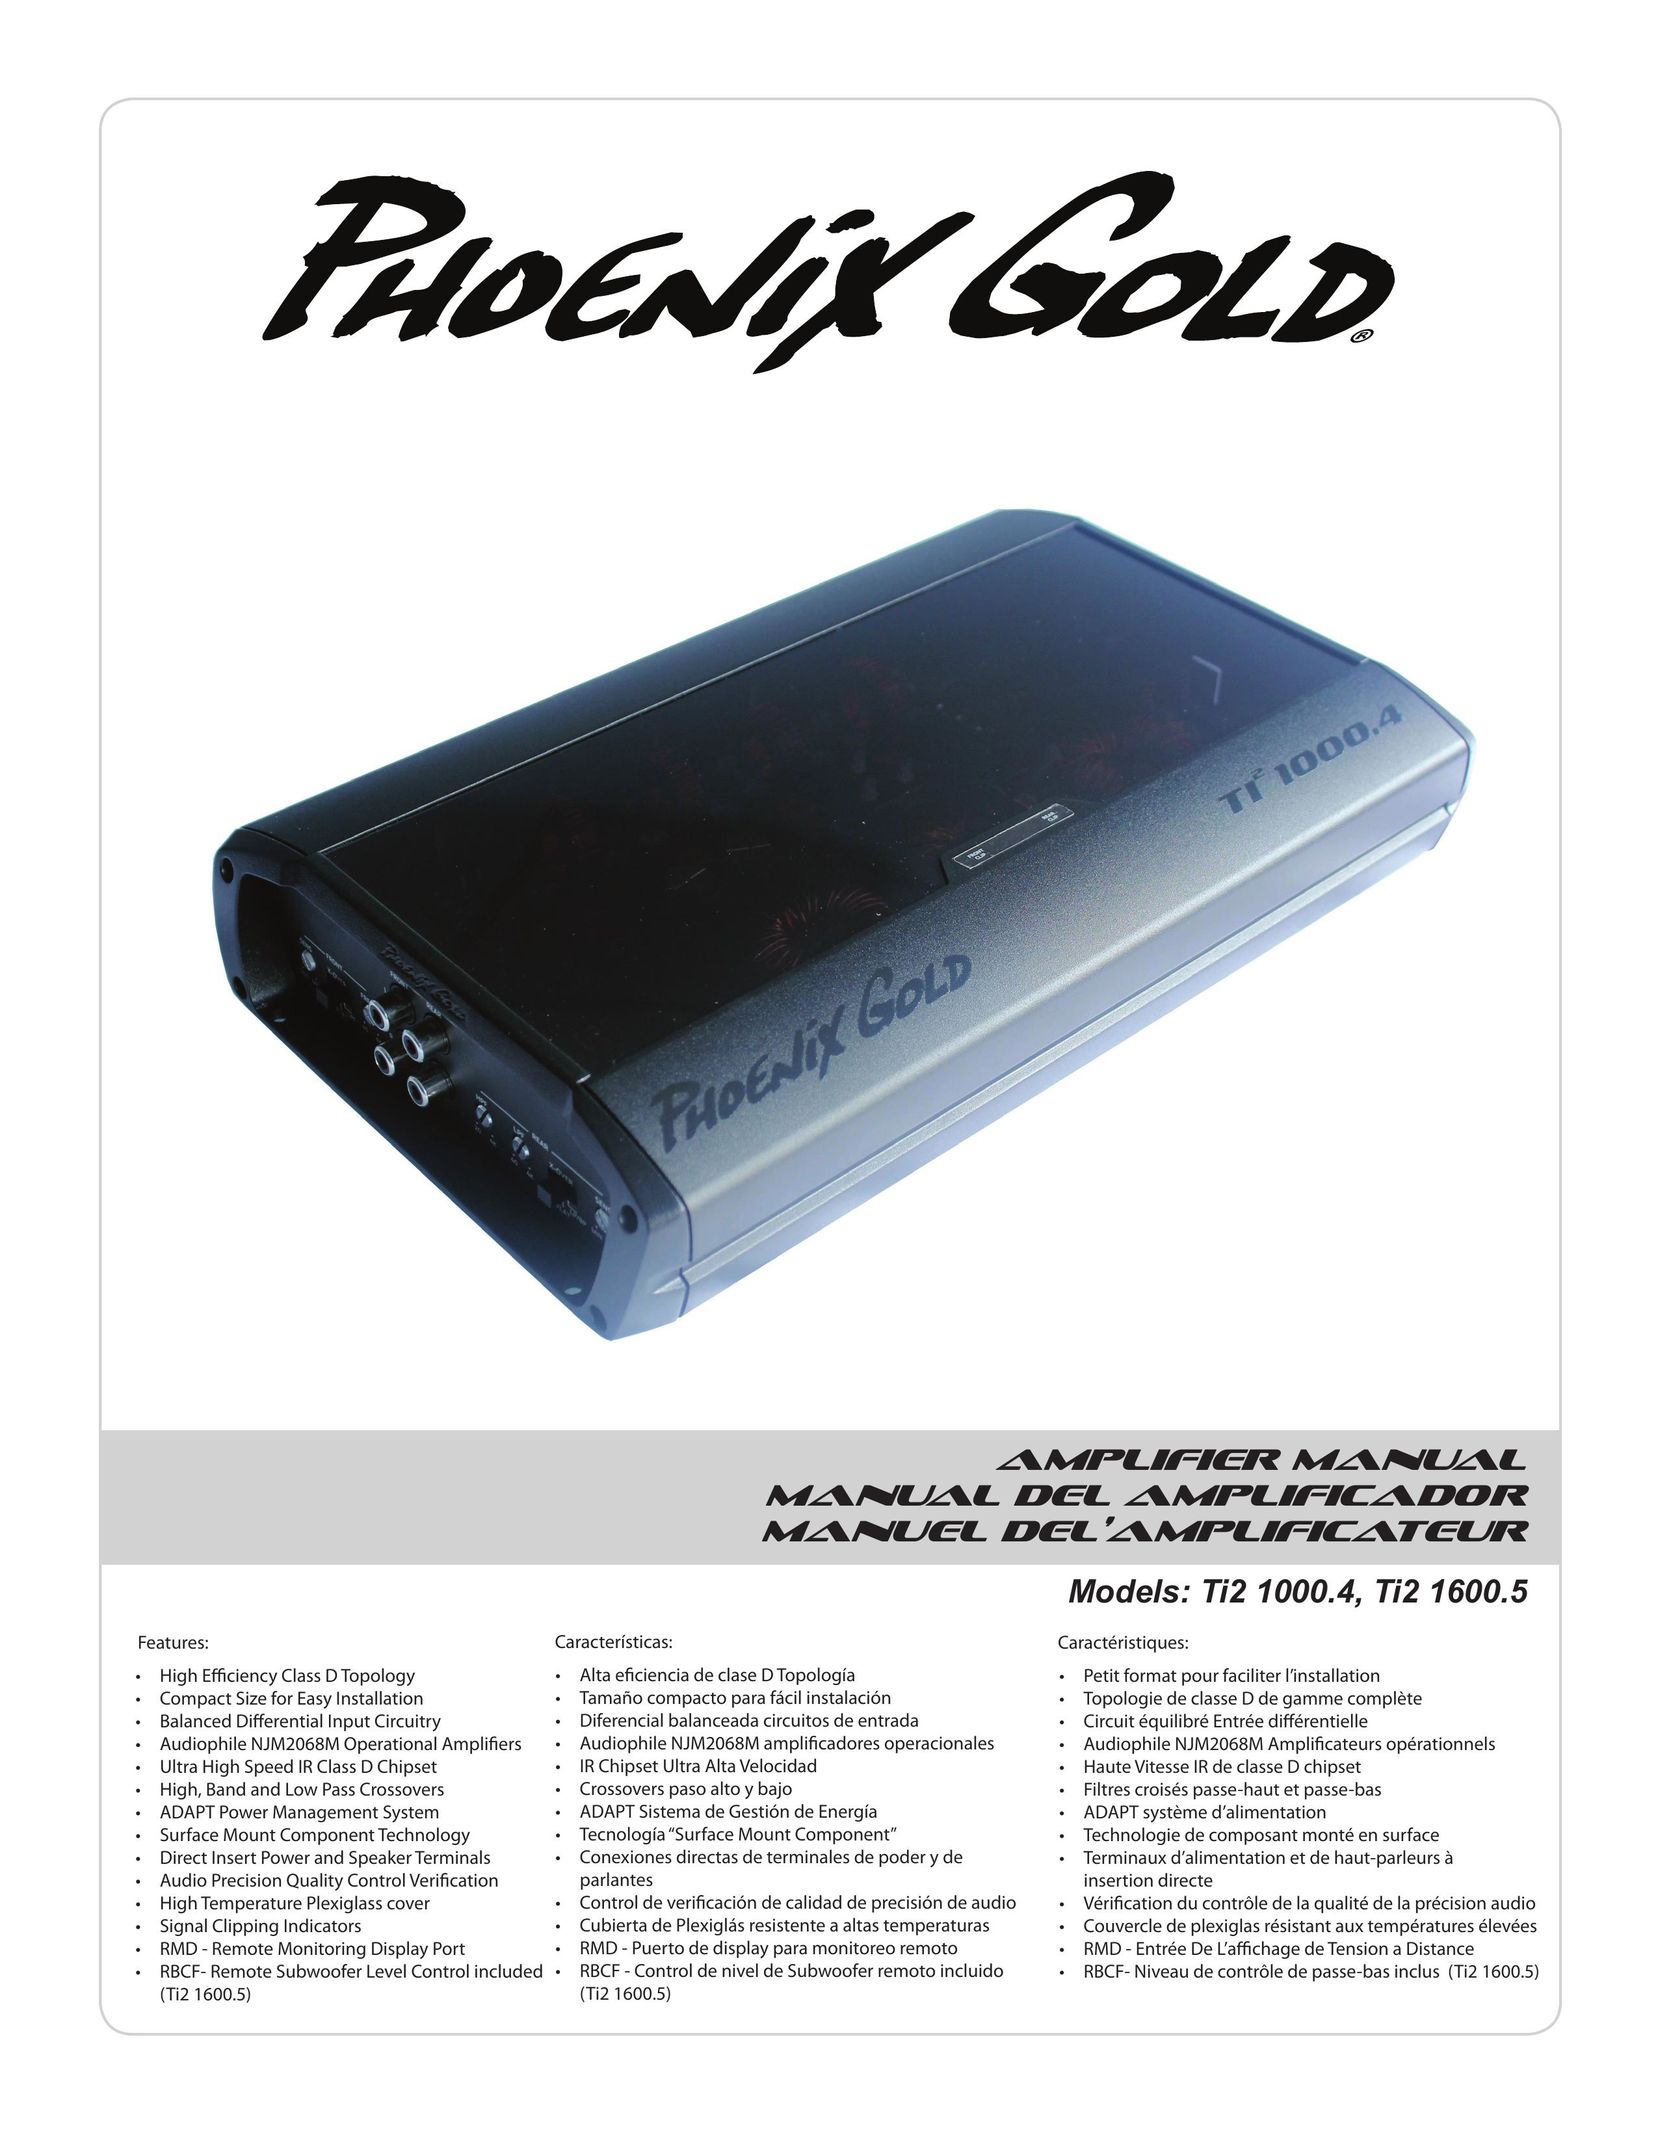 Phoenix Gold TI2 1600.5 Car Amplifier User Manual